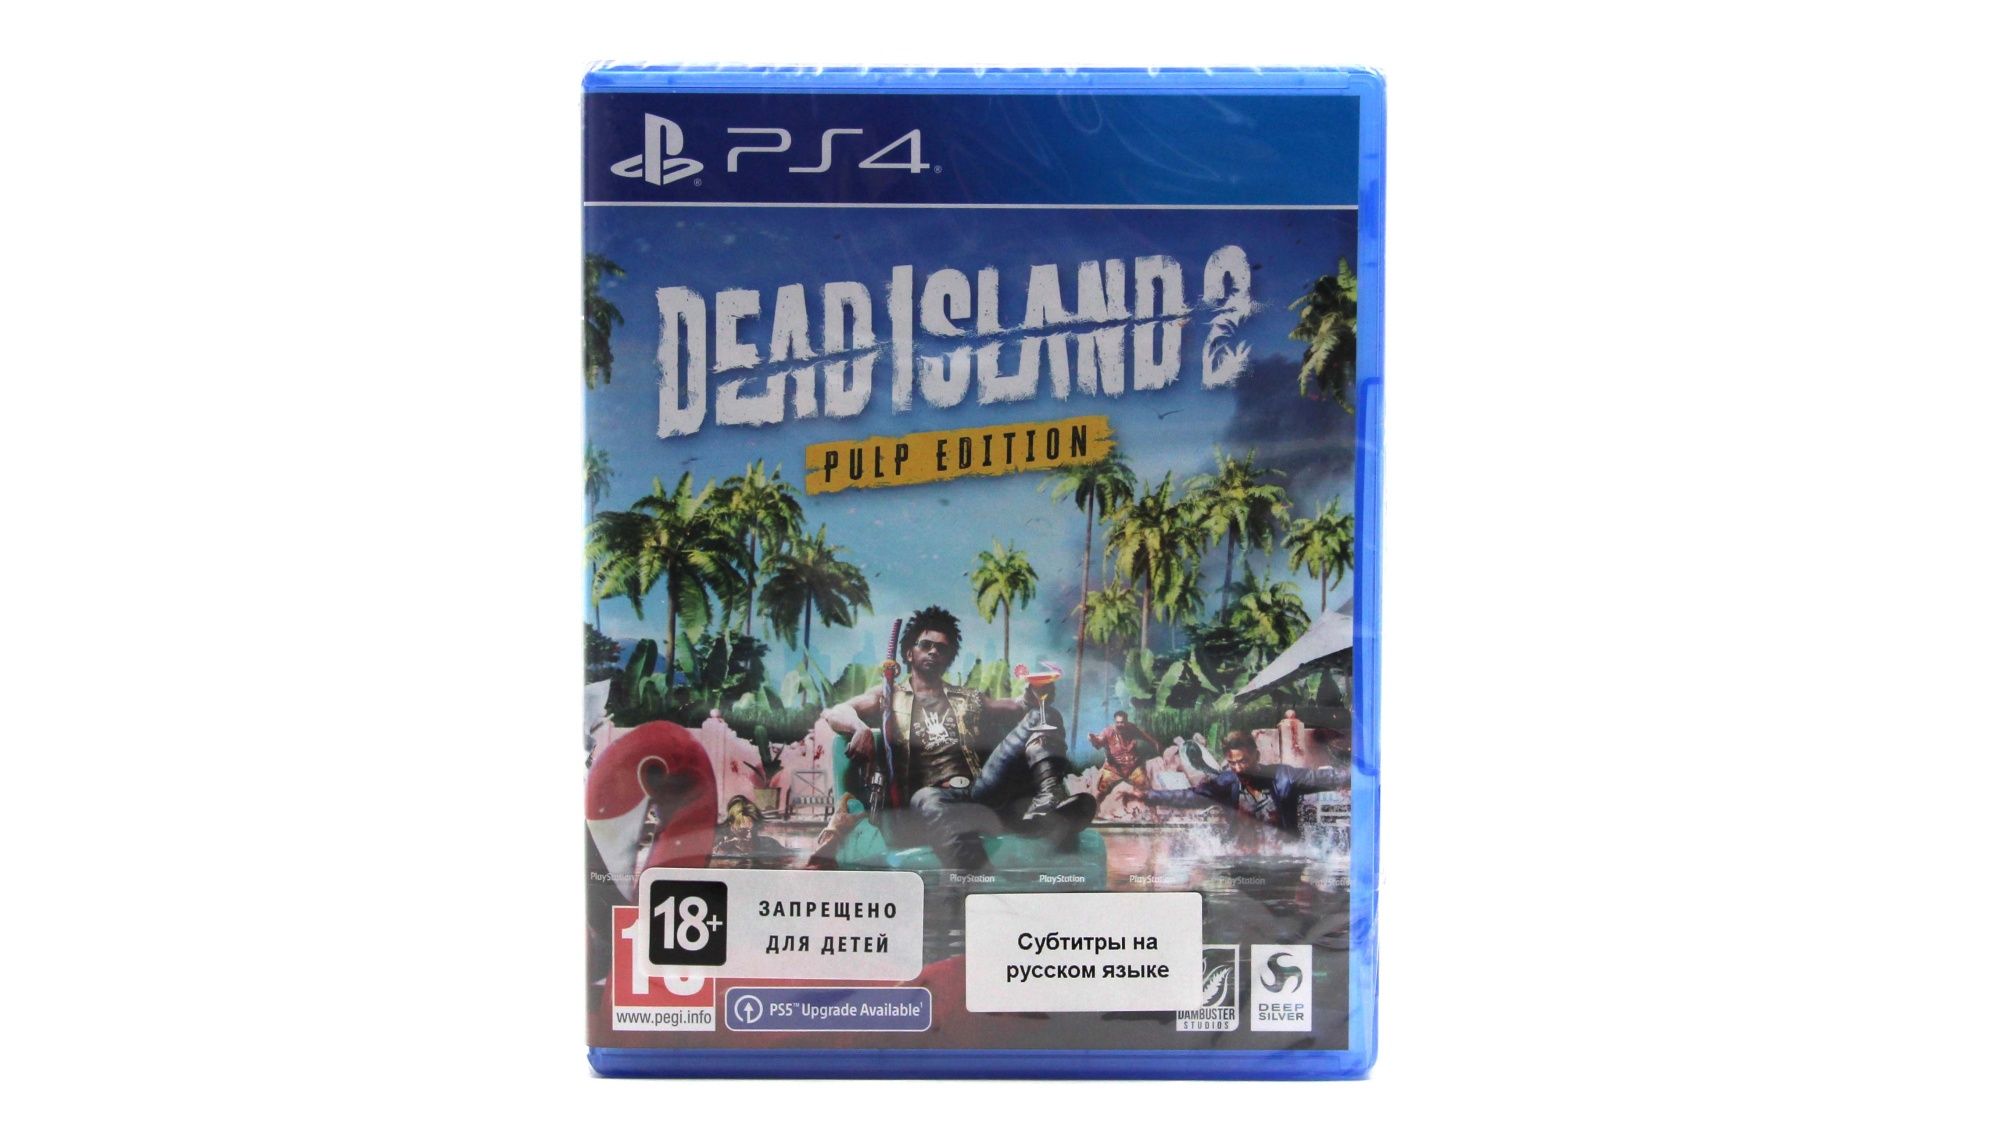 Pulp edition dead island. Dead Island 2 Pulp Edition Pack. Dead Island 2 Pulp Edition отличия. Dead Island 2 Pulp Edition что входит.